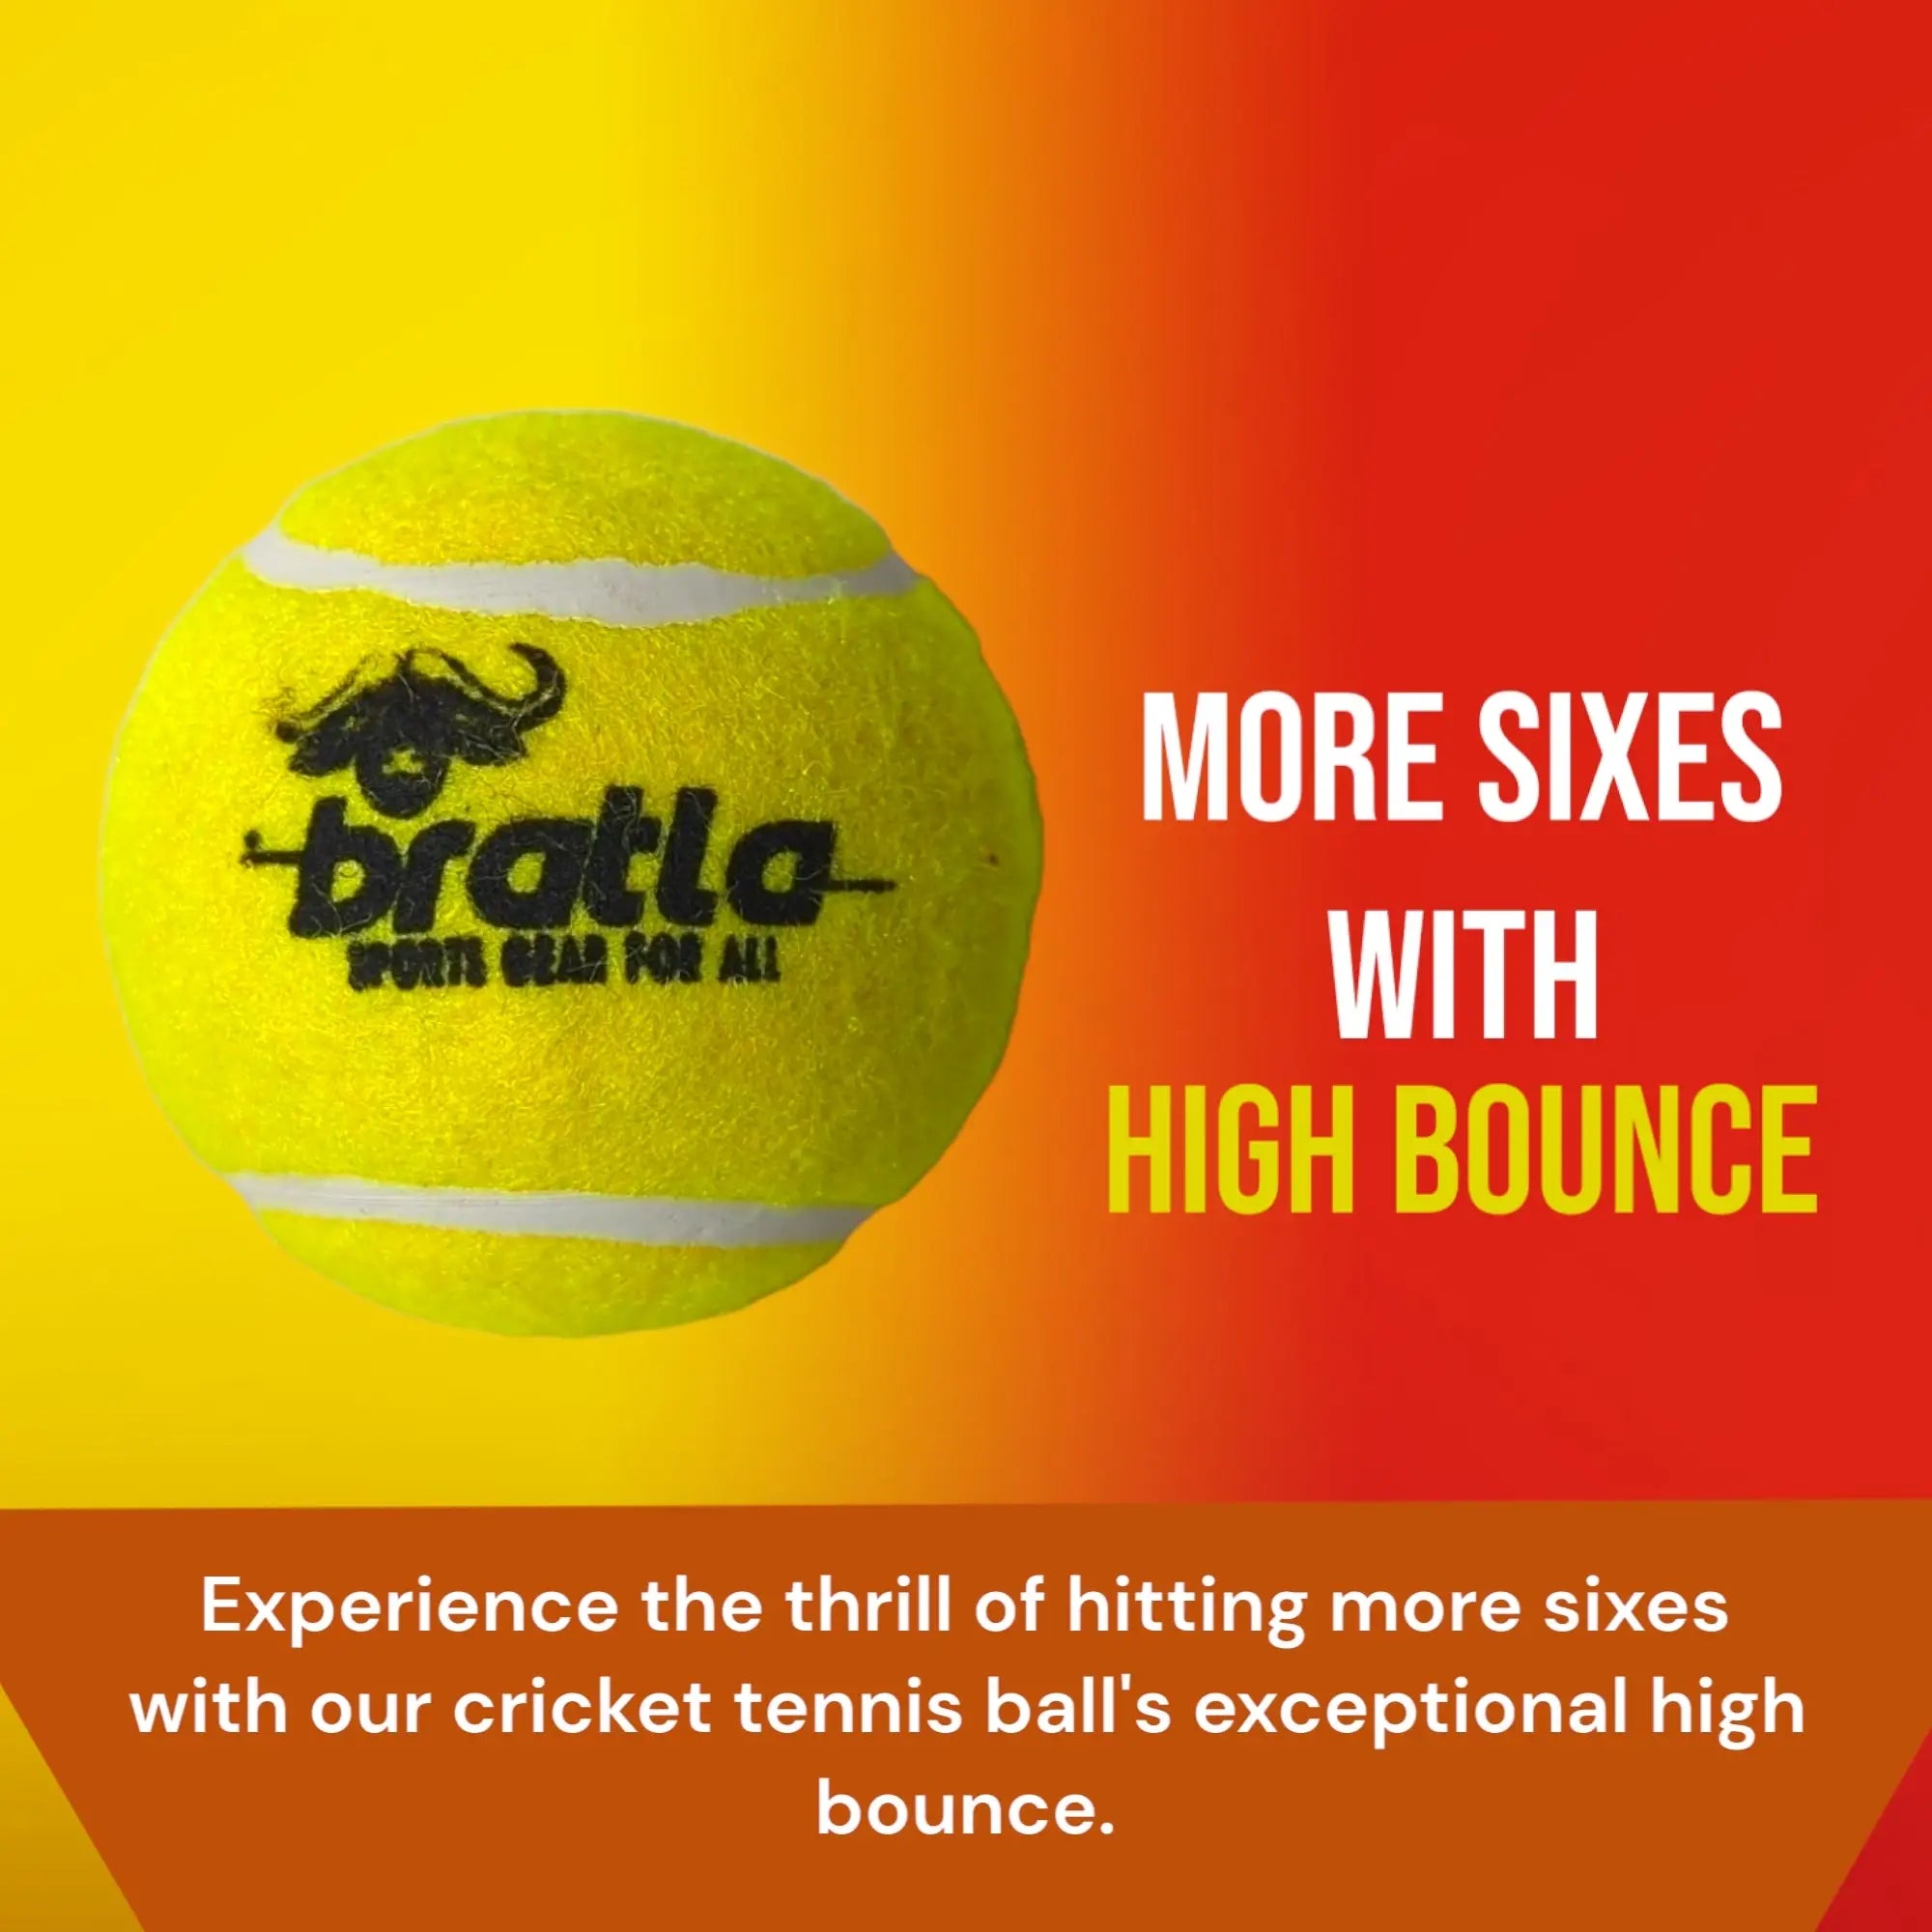 Bratla Pro Cricket Tennis Tape Ball Pack of 3 Lightweight - BALL - SOFTBALL